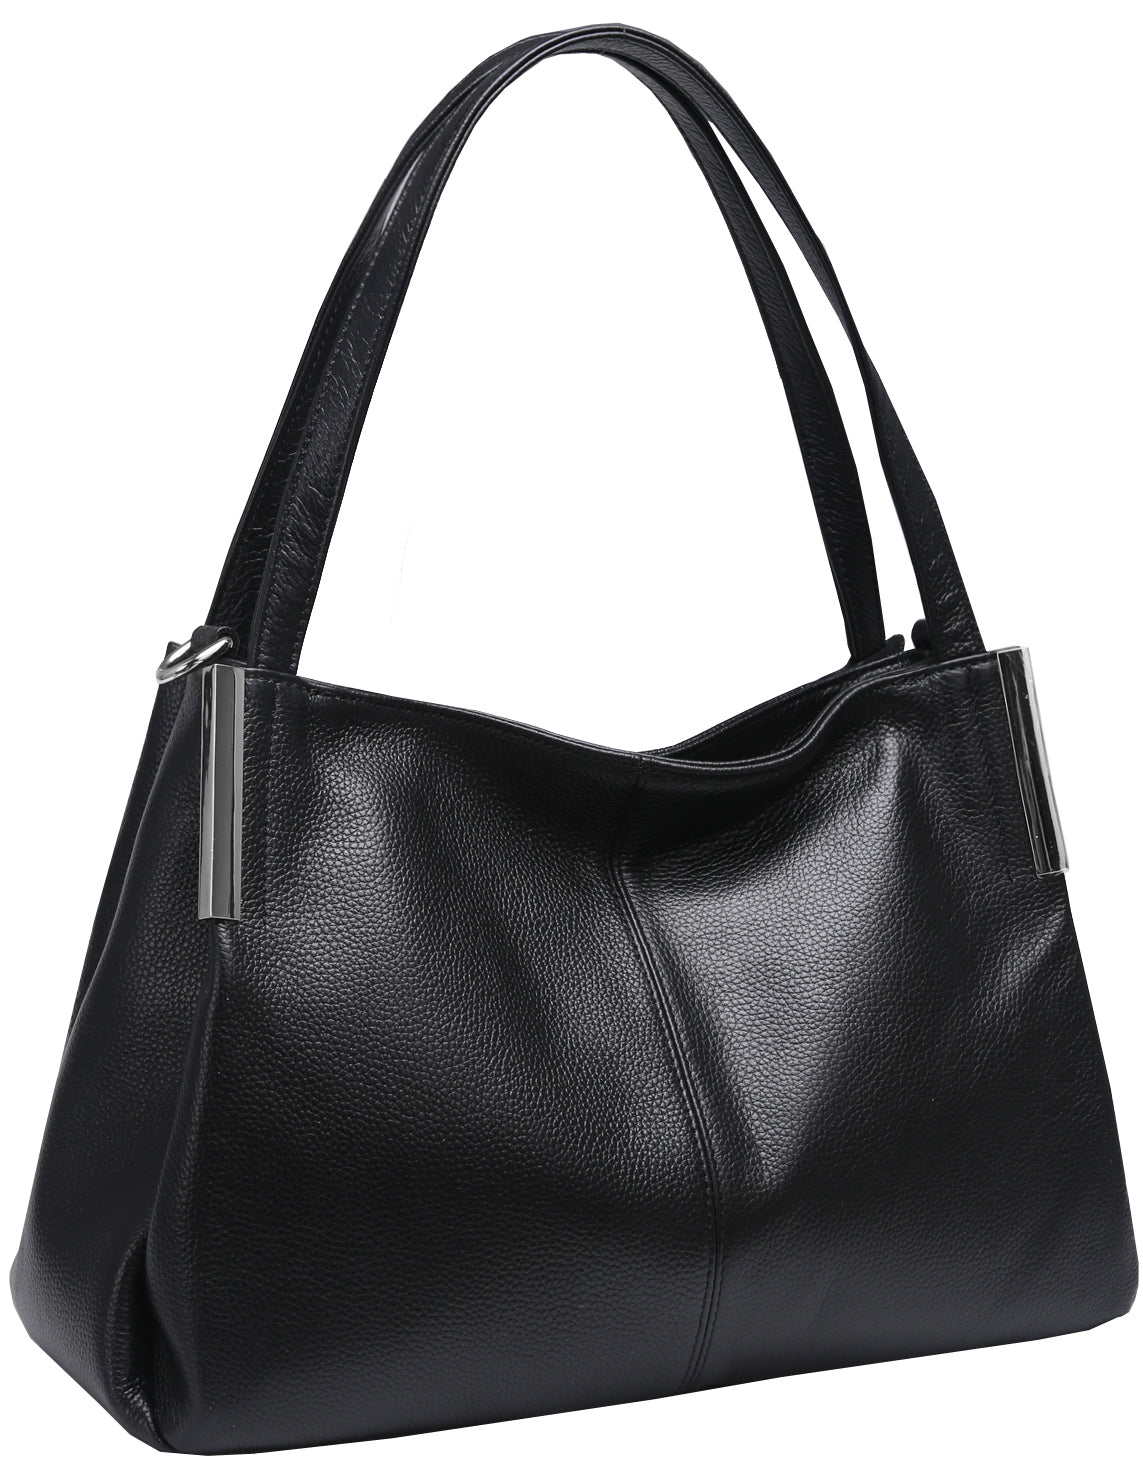 Heshe Women’s Genuine Leather Handbags